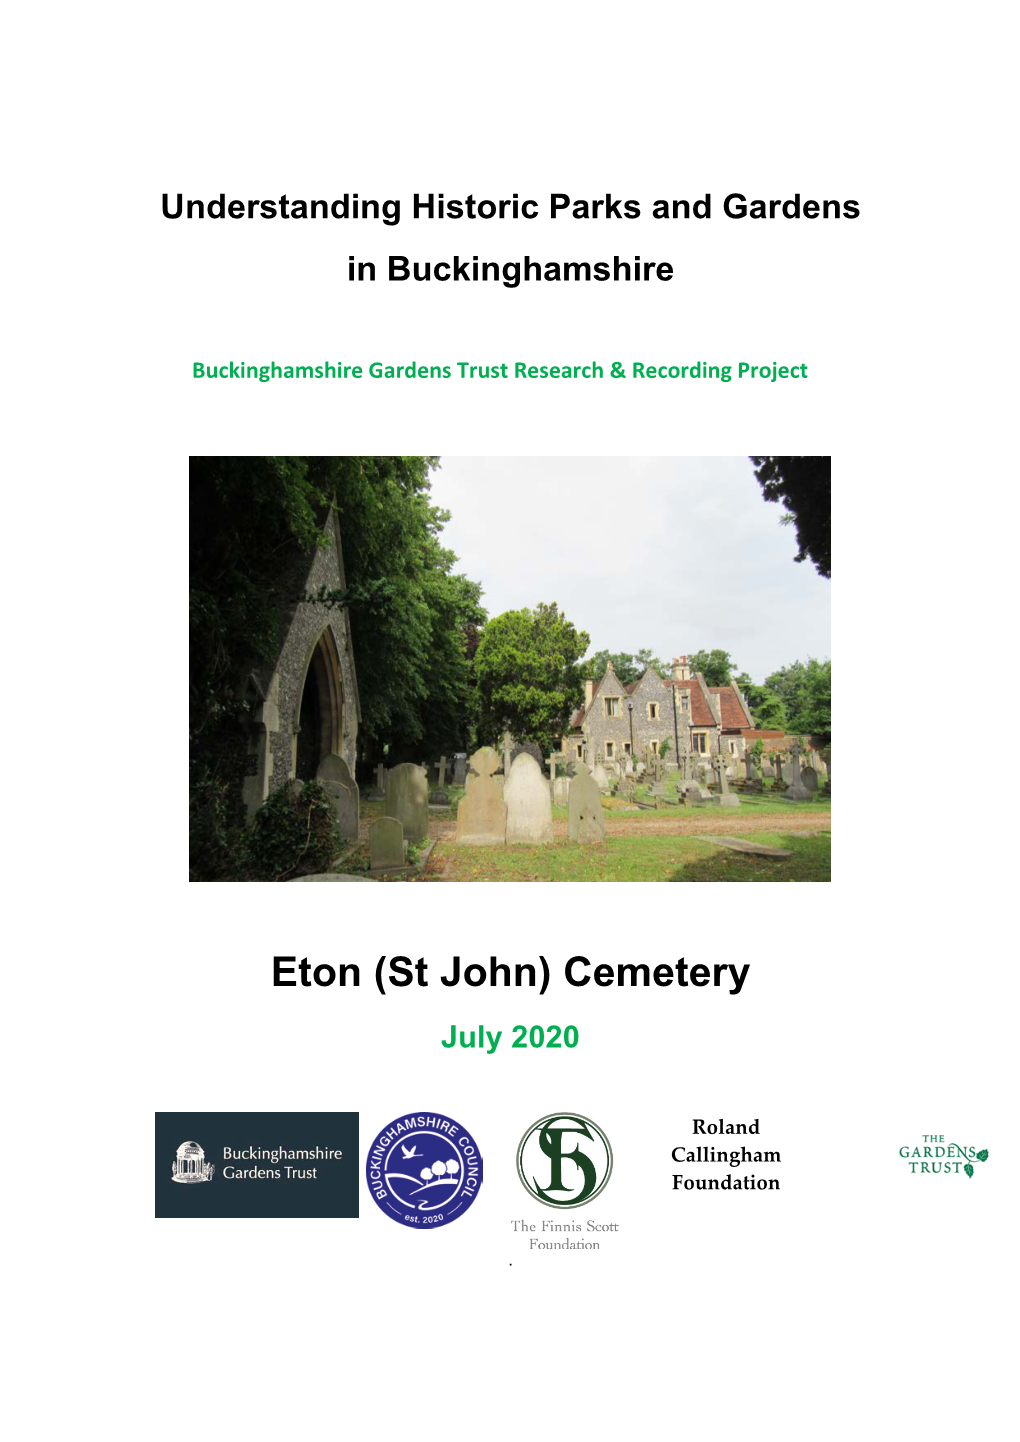 Eton (St John) Cemetery July 2020